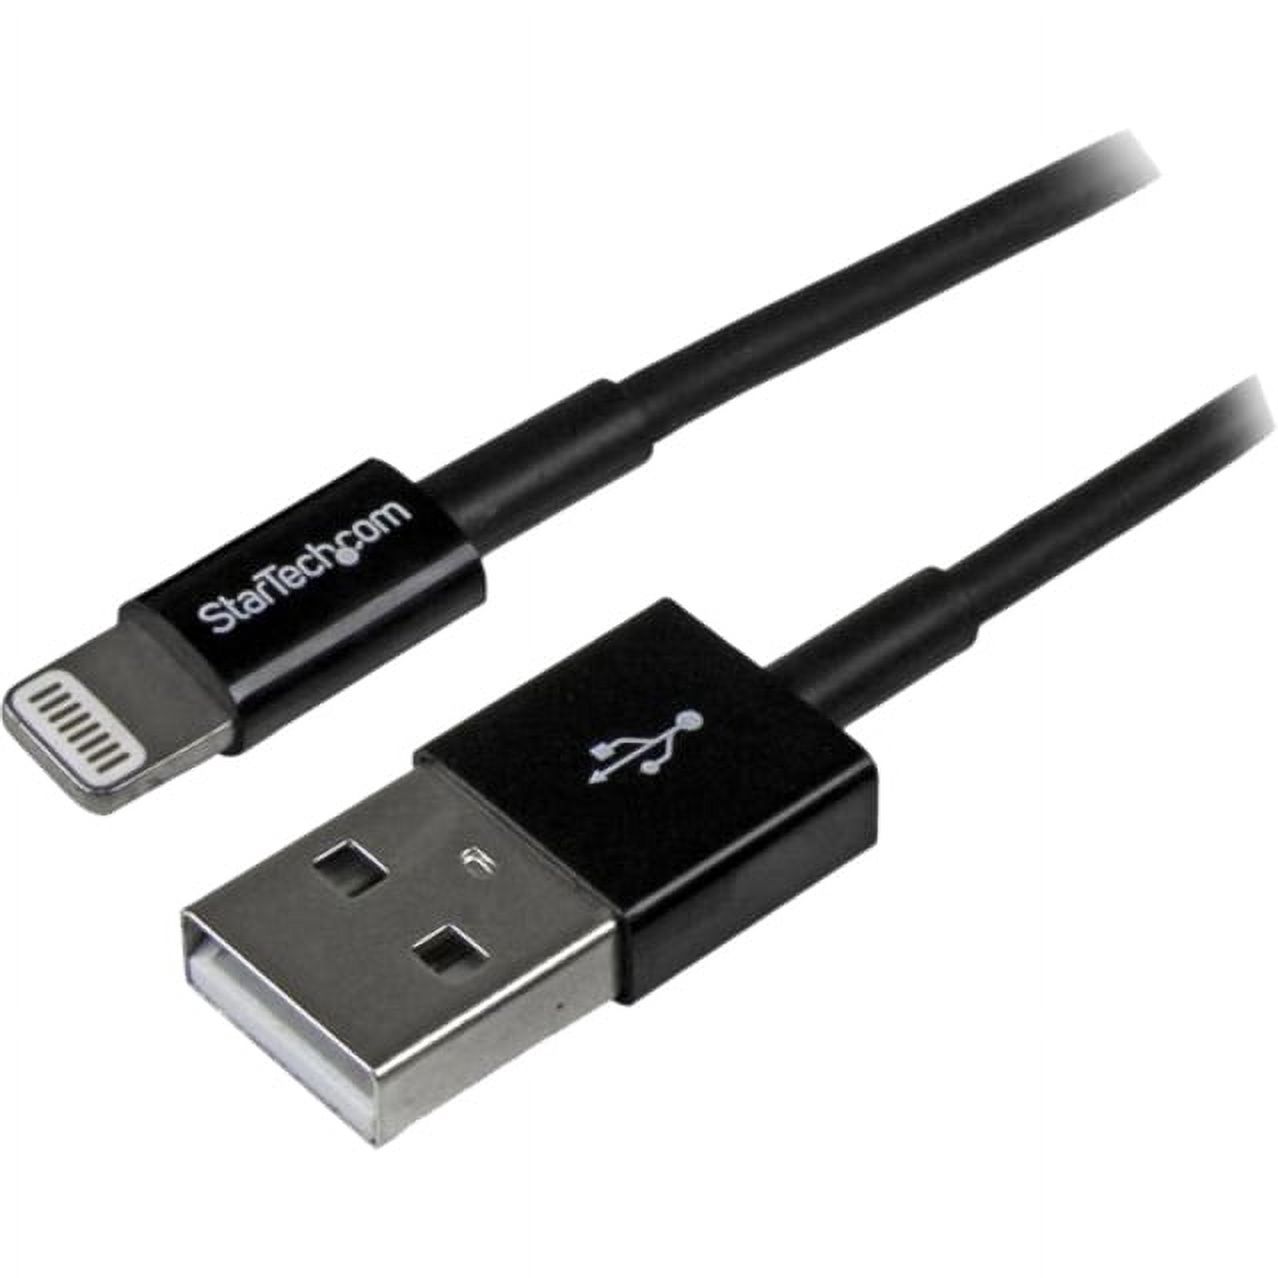 Startech USBLT1MBS USB to Lightning Cable Apple MFi Certified Slim 1 m (3 ft.) Black - image 2 of 4